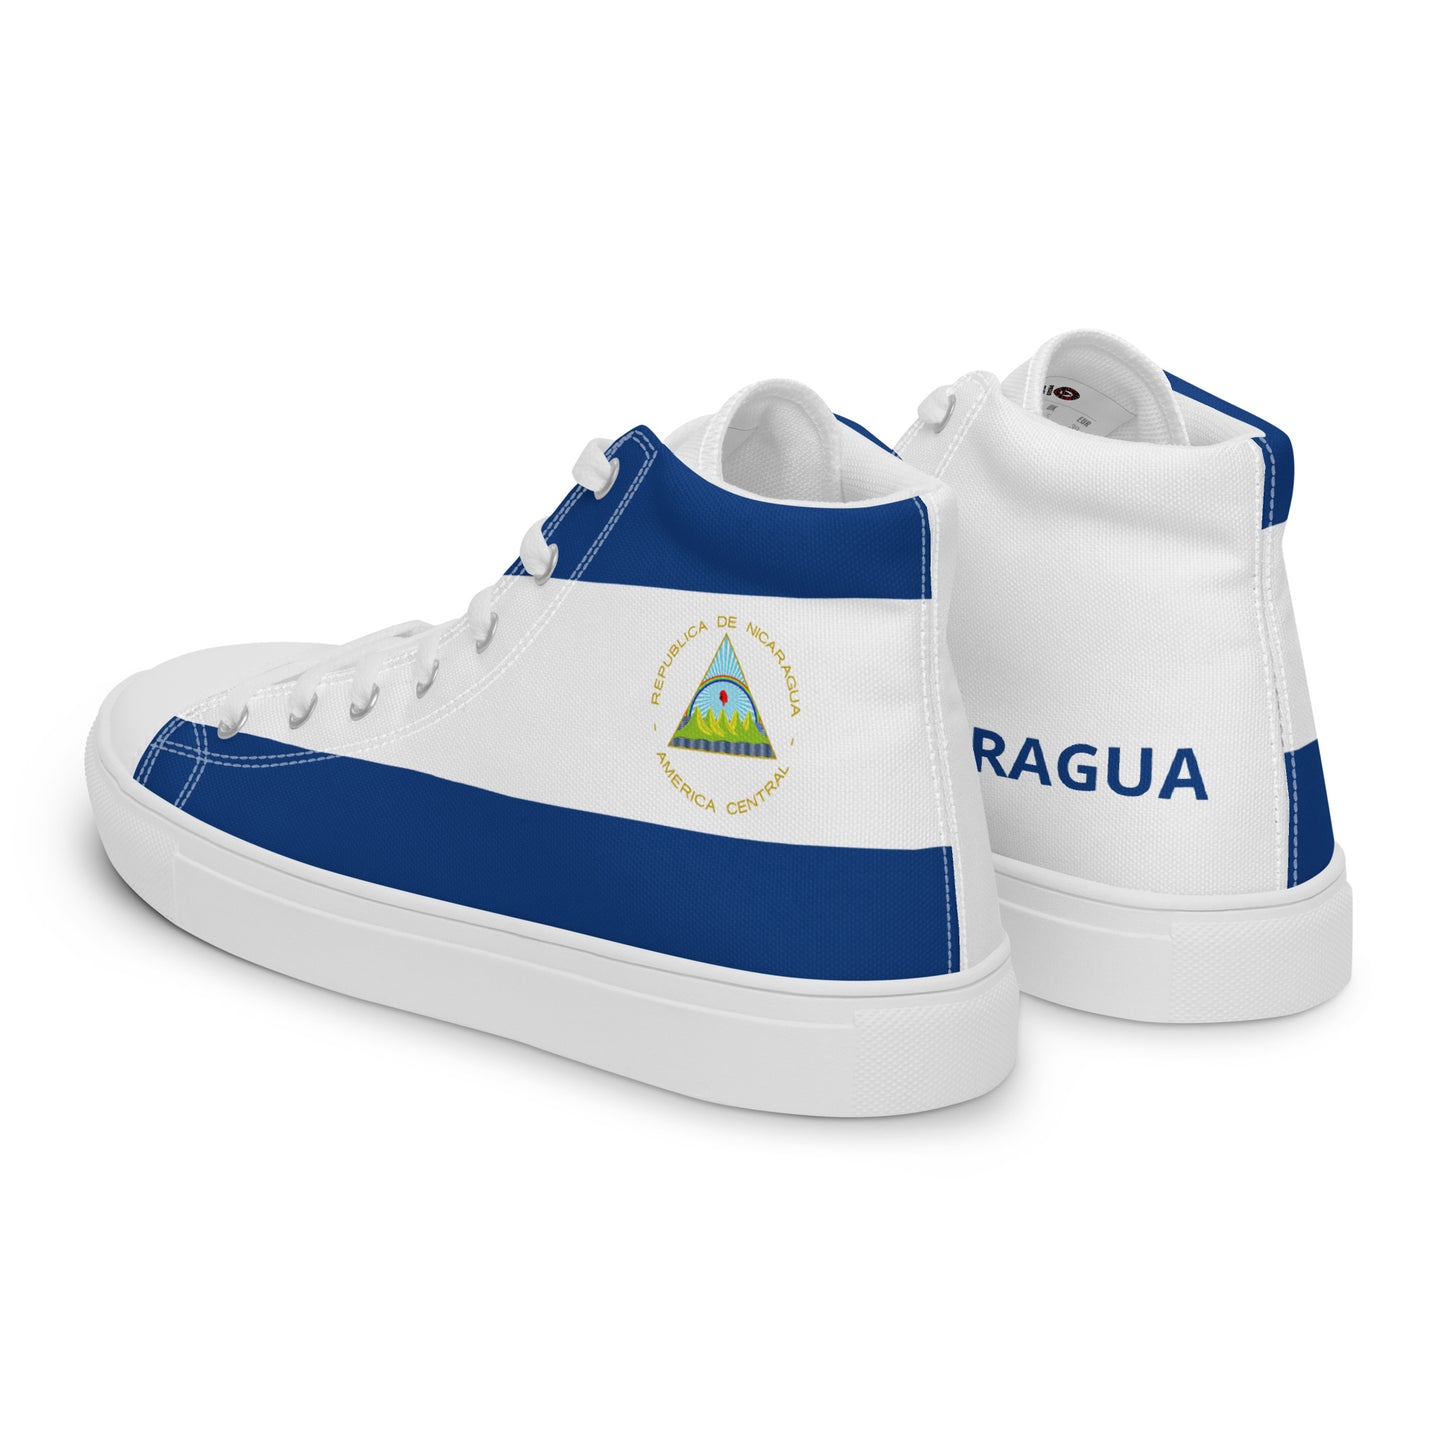 Nicaragua - Men - Bandera - High top shoes